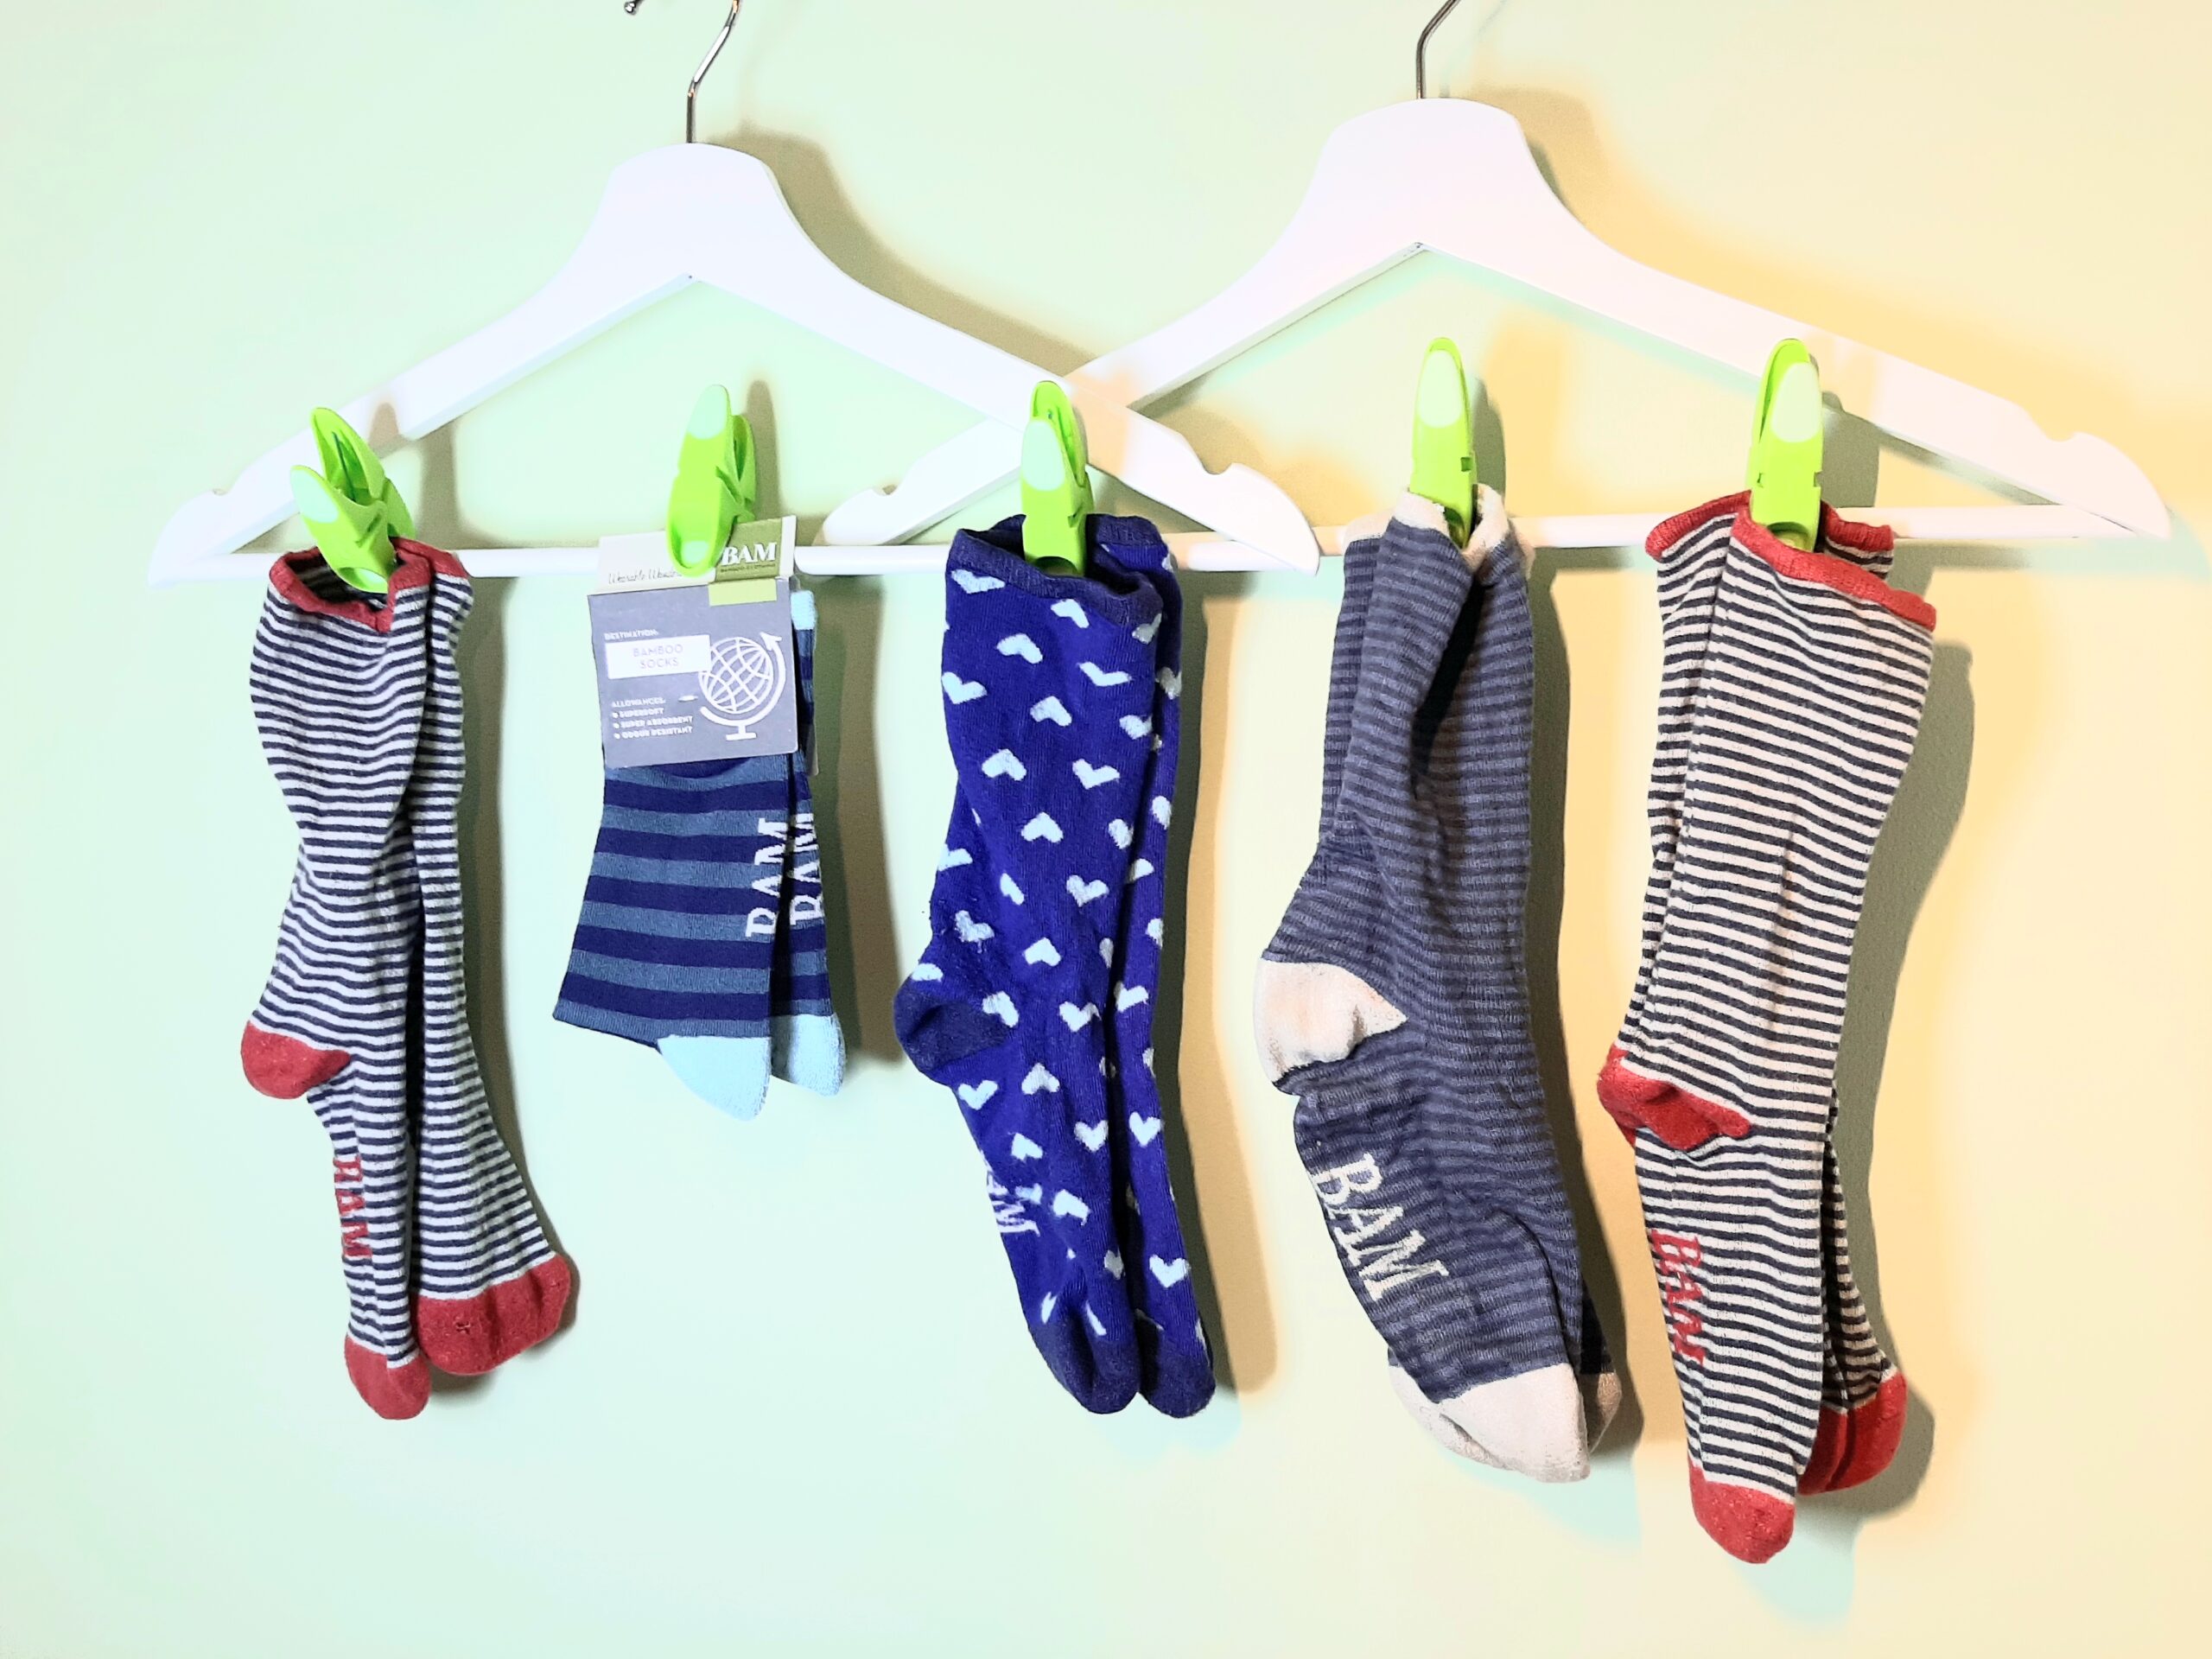 6 pairs of Bam socks pegged on coat hangers